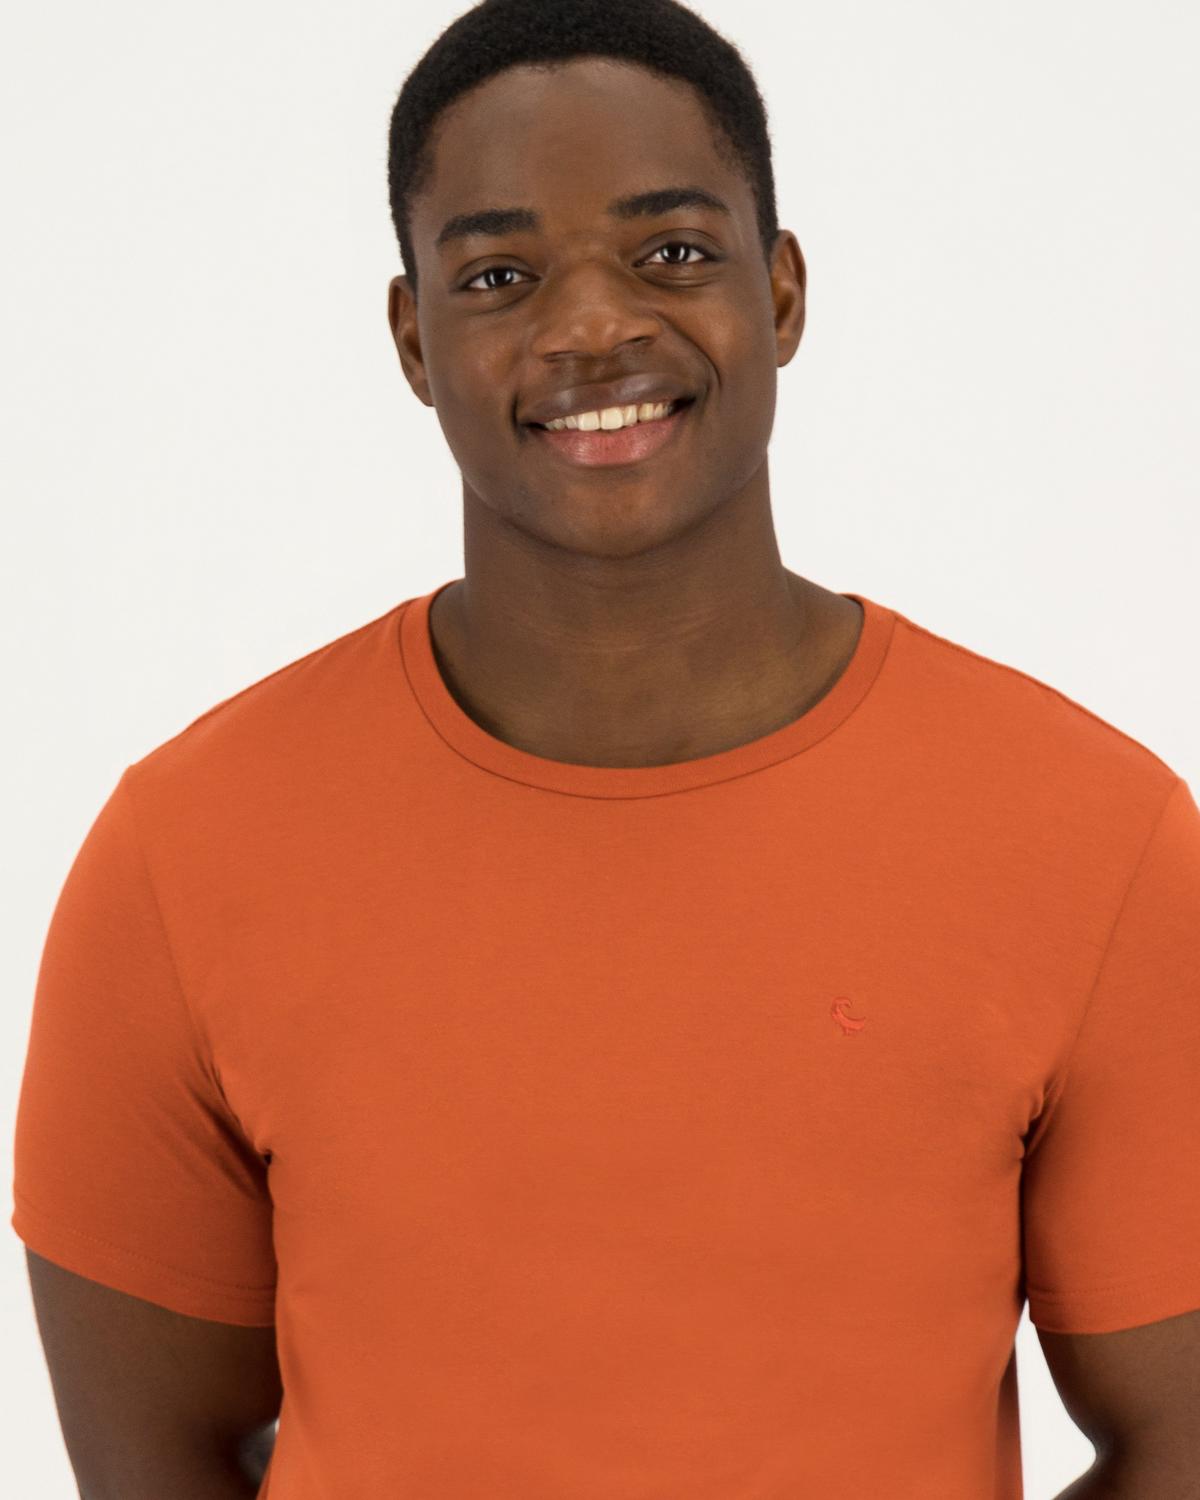 Men's Nick Standard Fit T-Shirt -  Rust